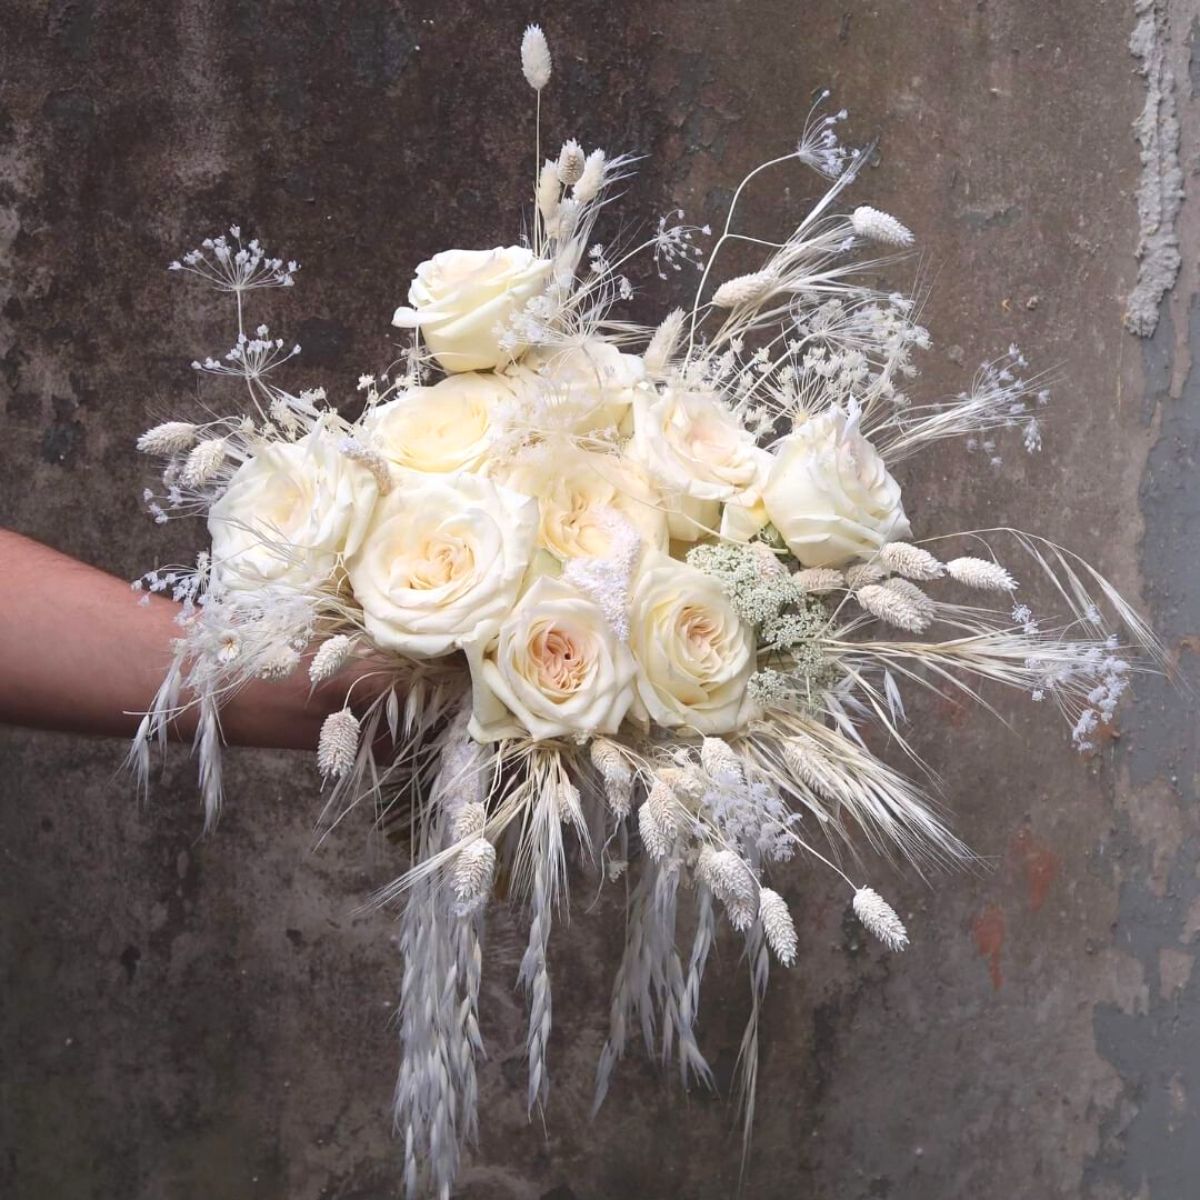 Winter white Christmas wedding bouquet by Decofresh